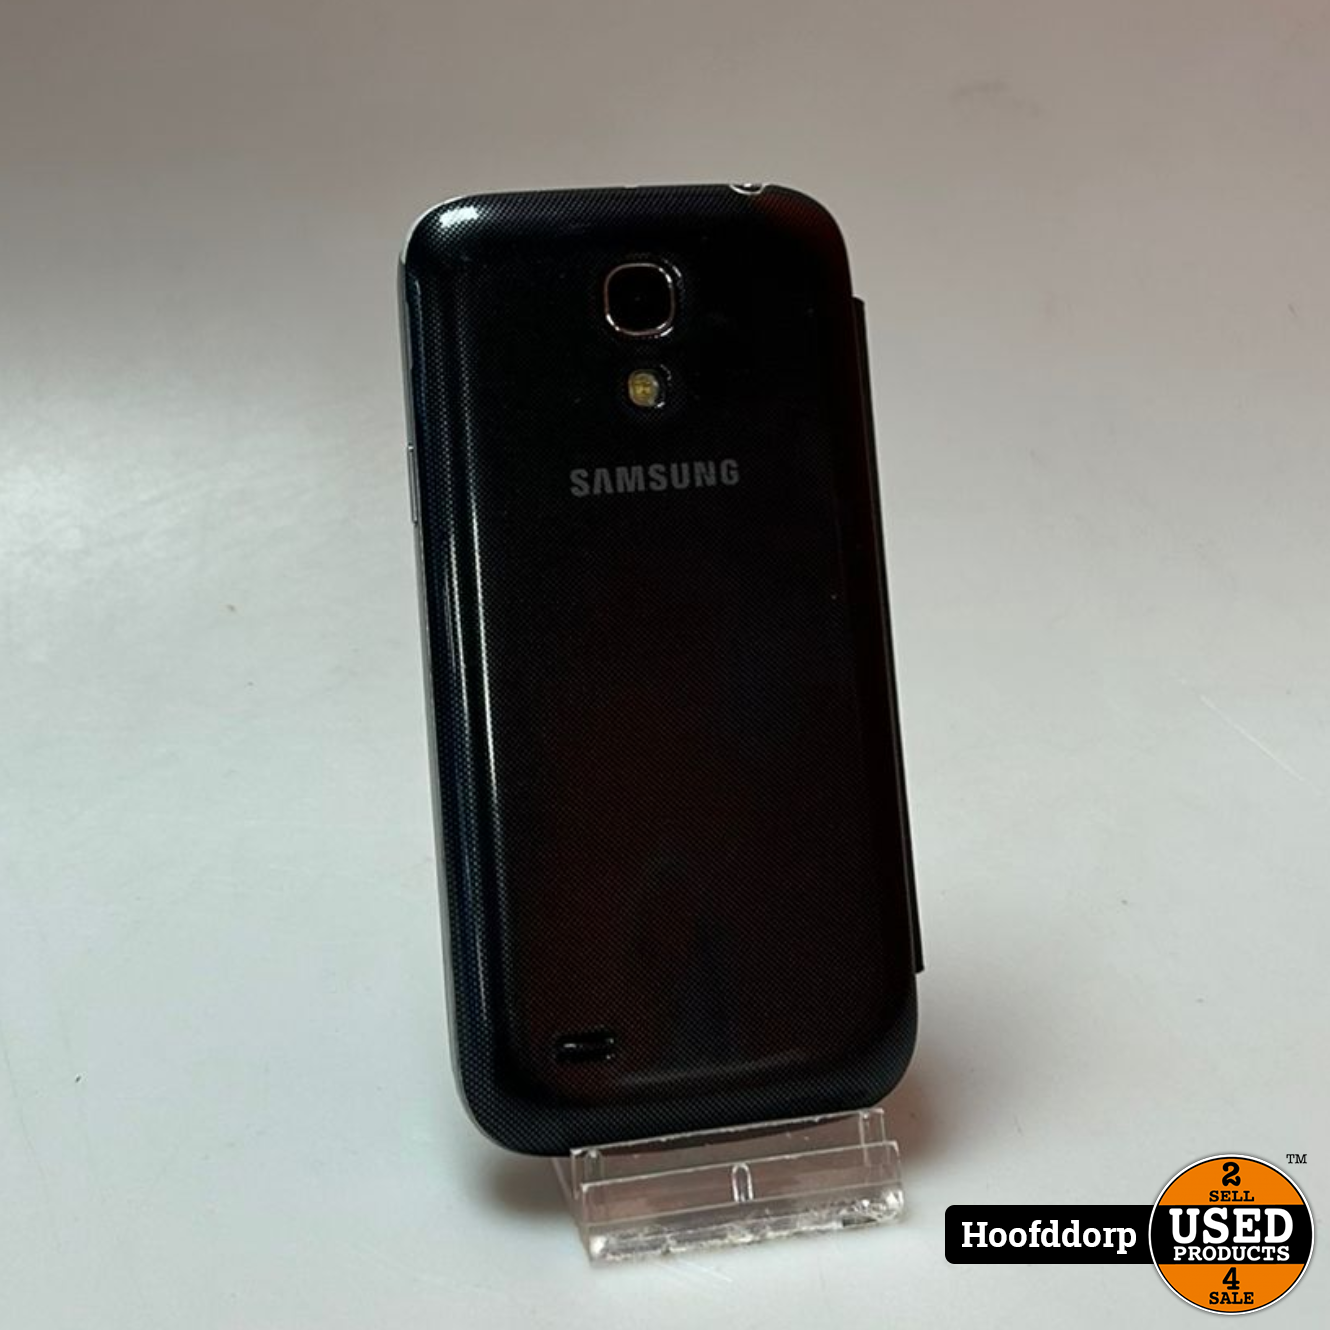 Matrix Onderhandelen knal Samsung Galaxy S4 mini - Used Products Hoofddorp